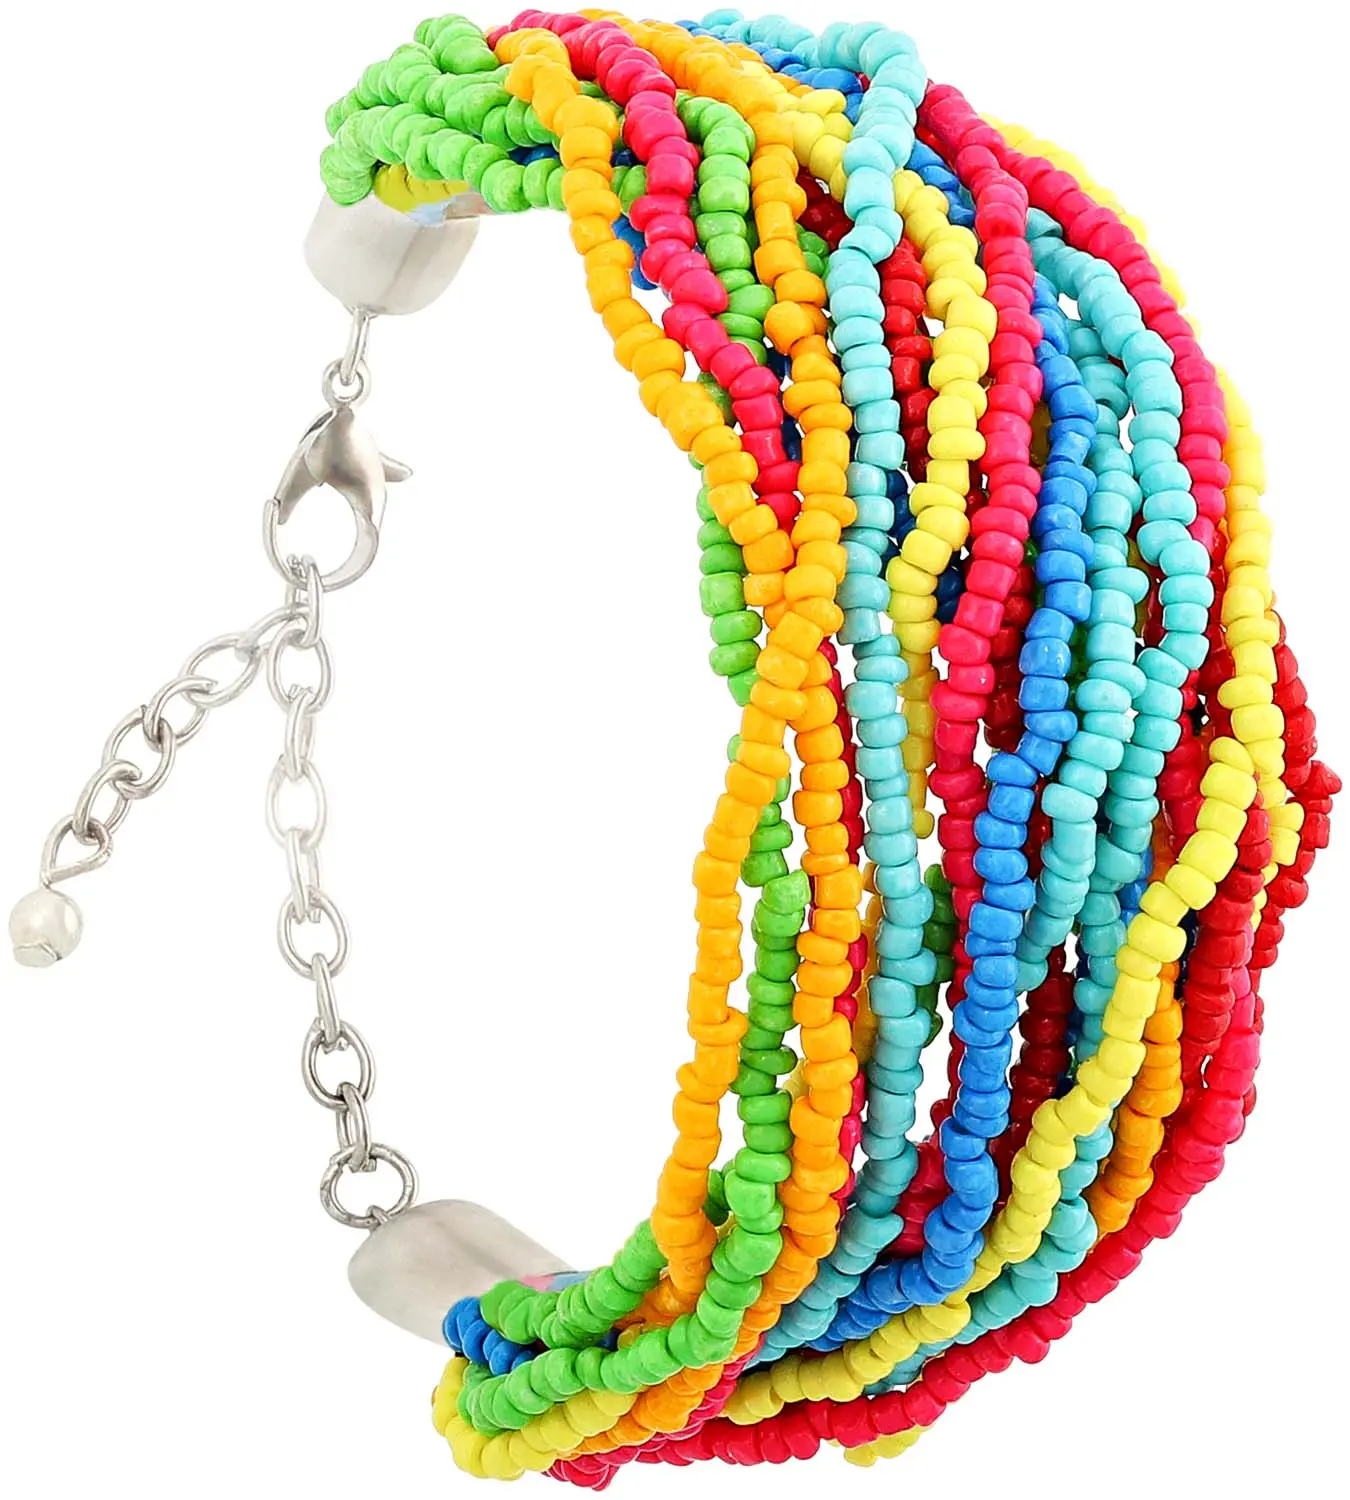 Pulsera - Multicolored Beads